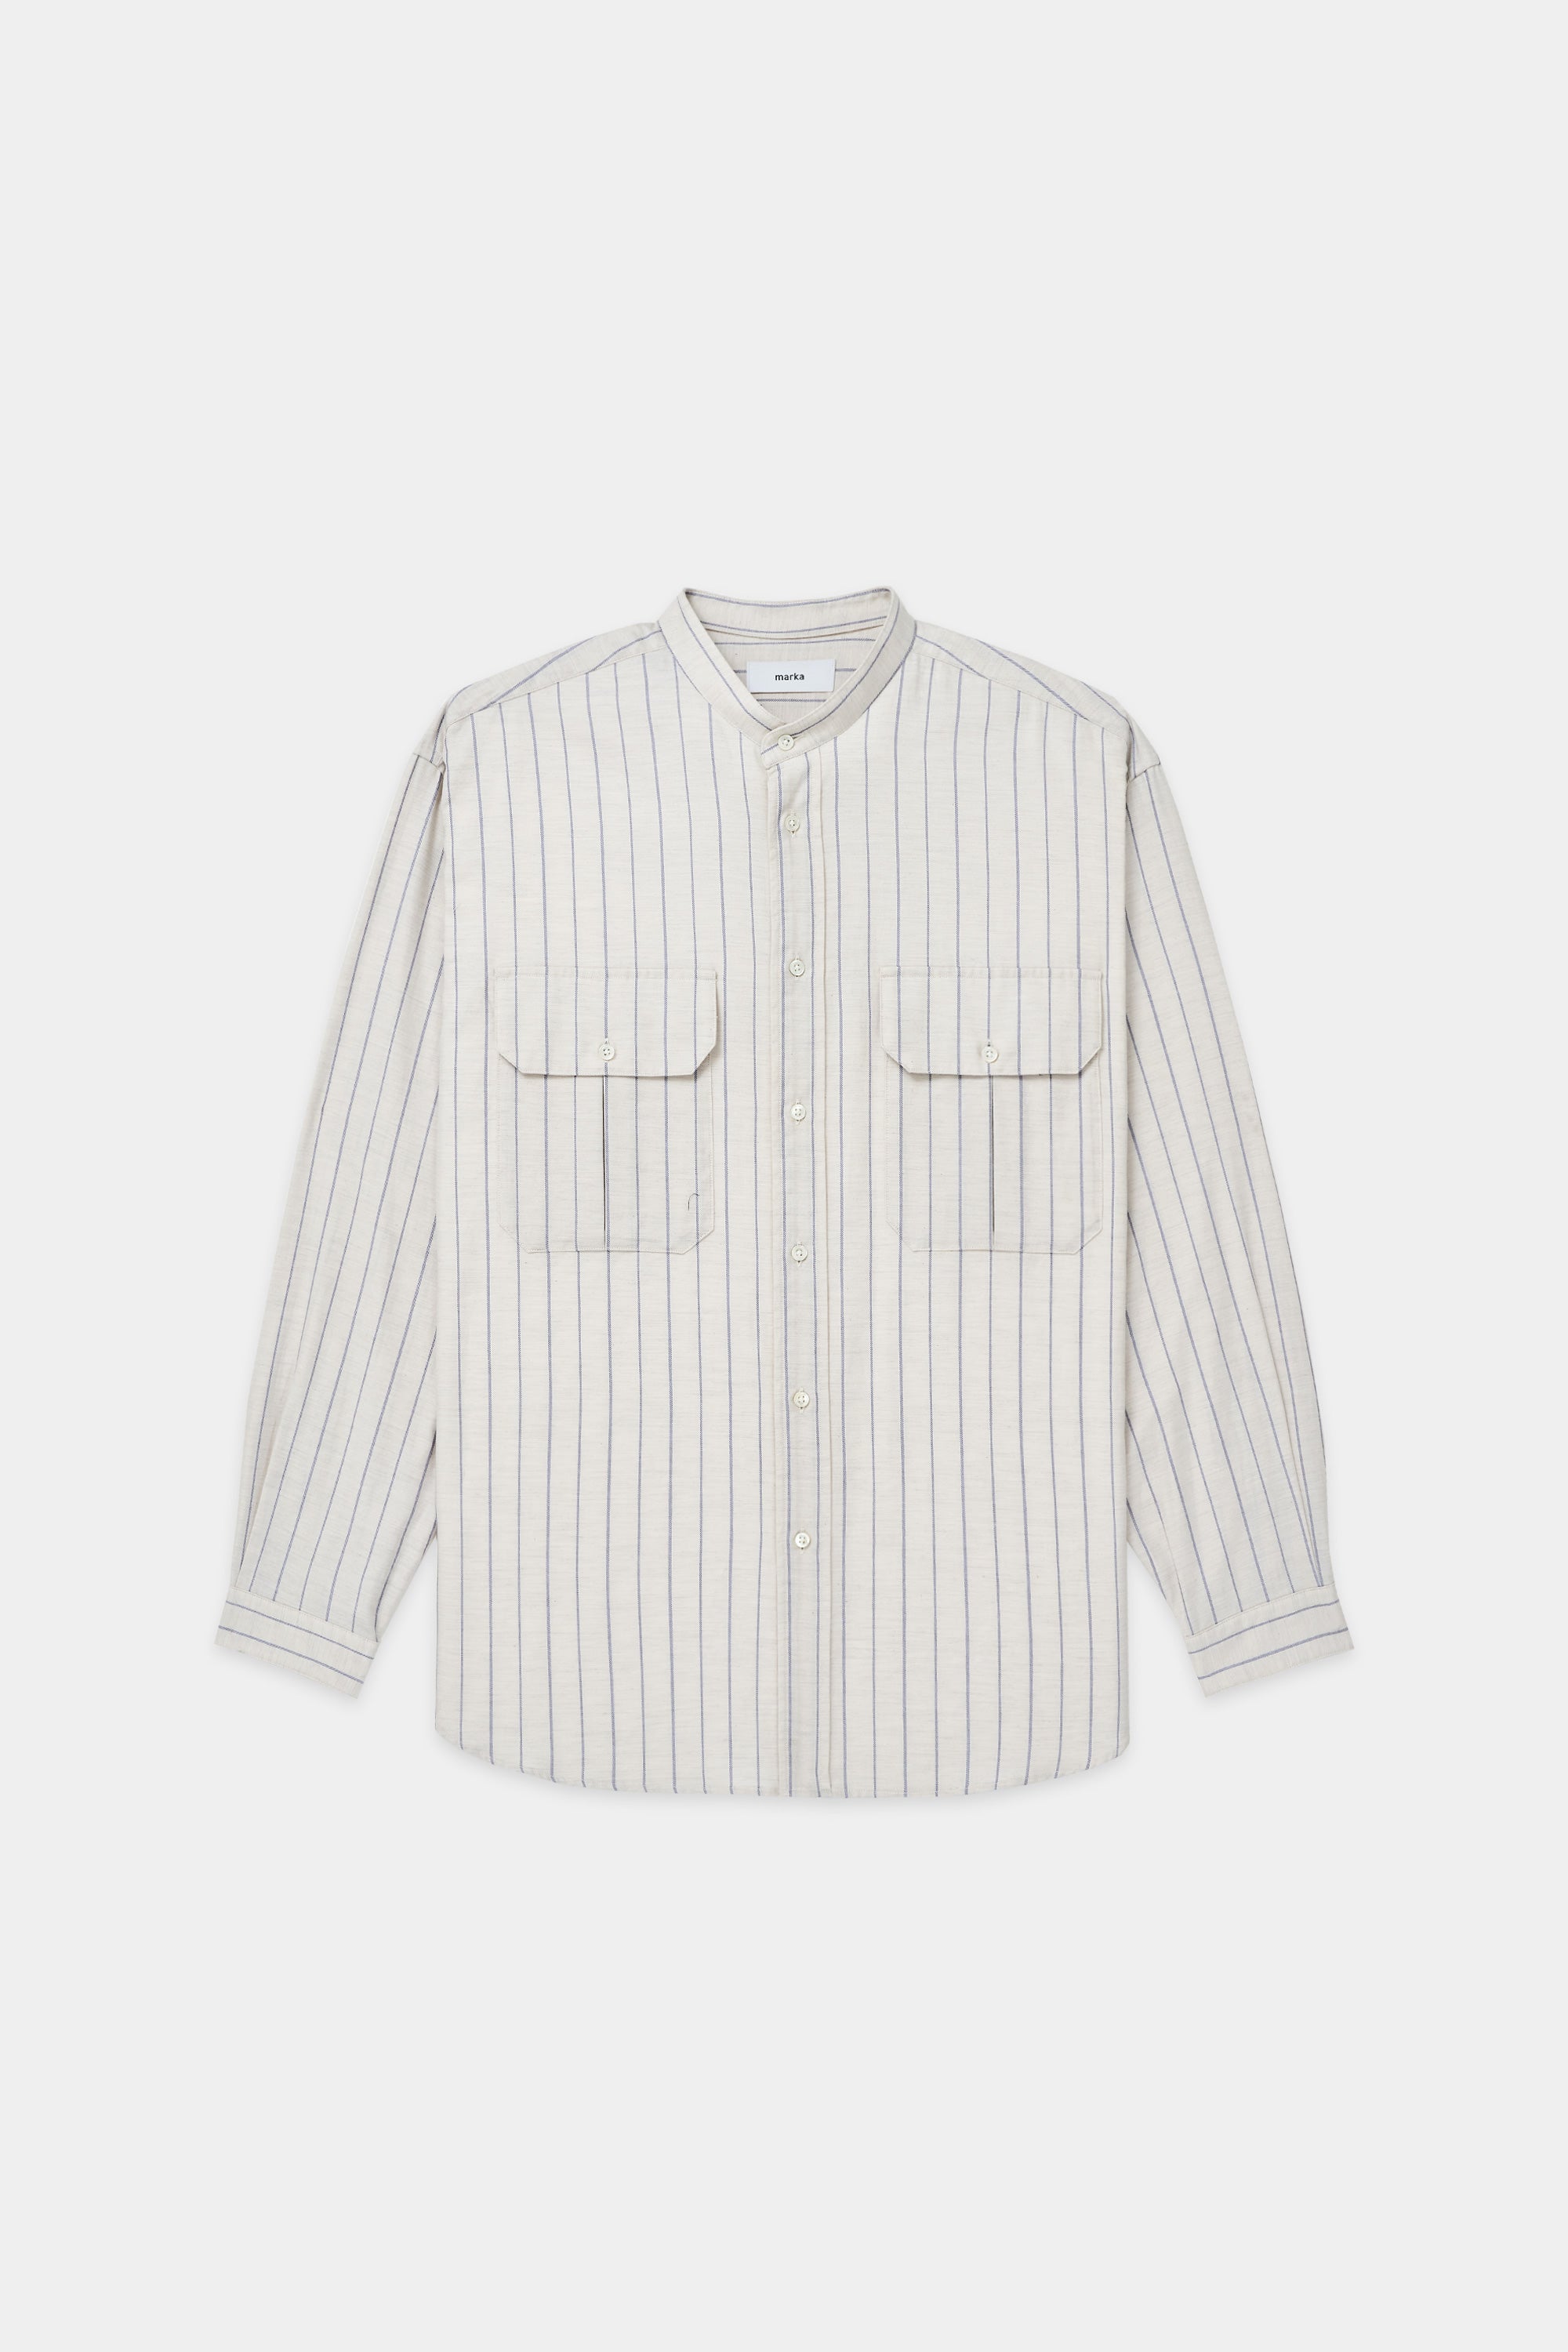 Stripe Viella W Pocket Band Collar Shirt, Ivory